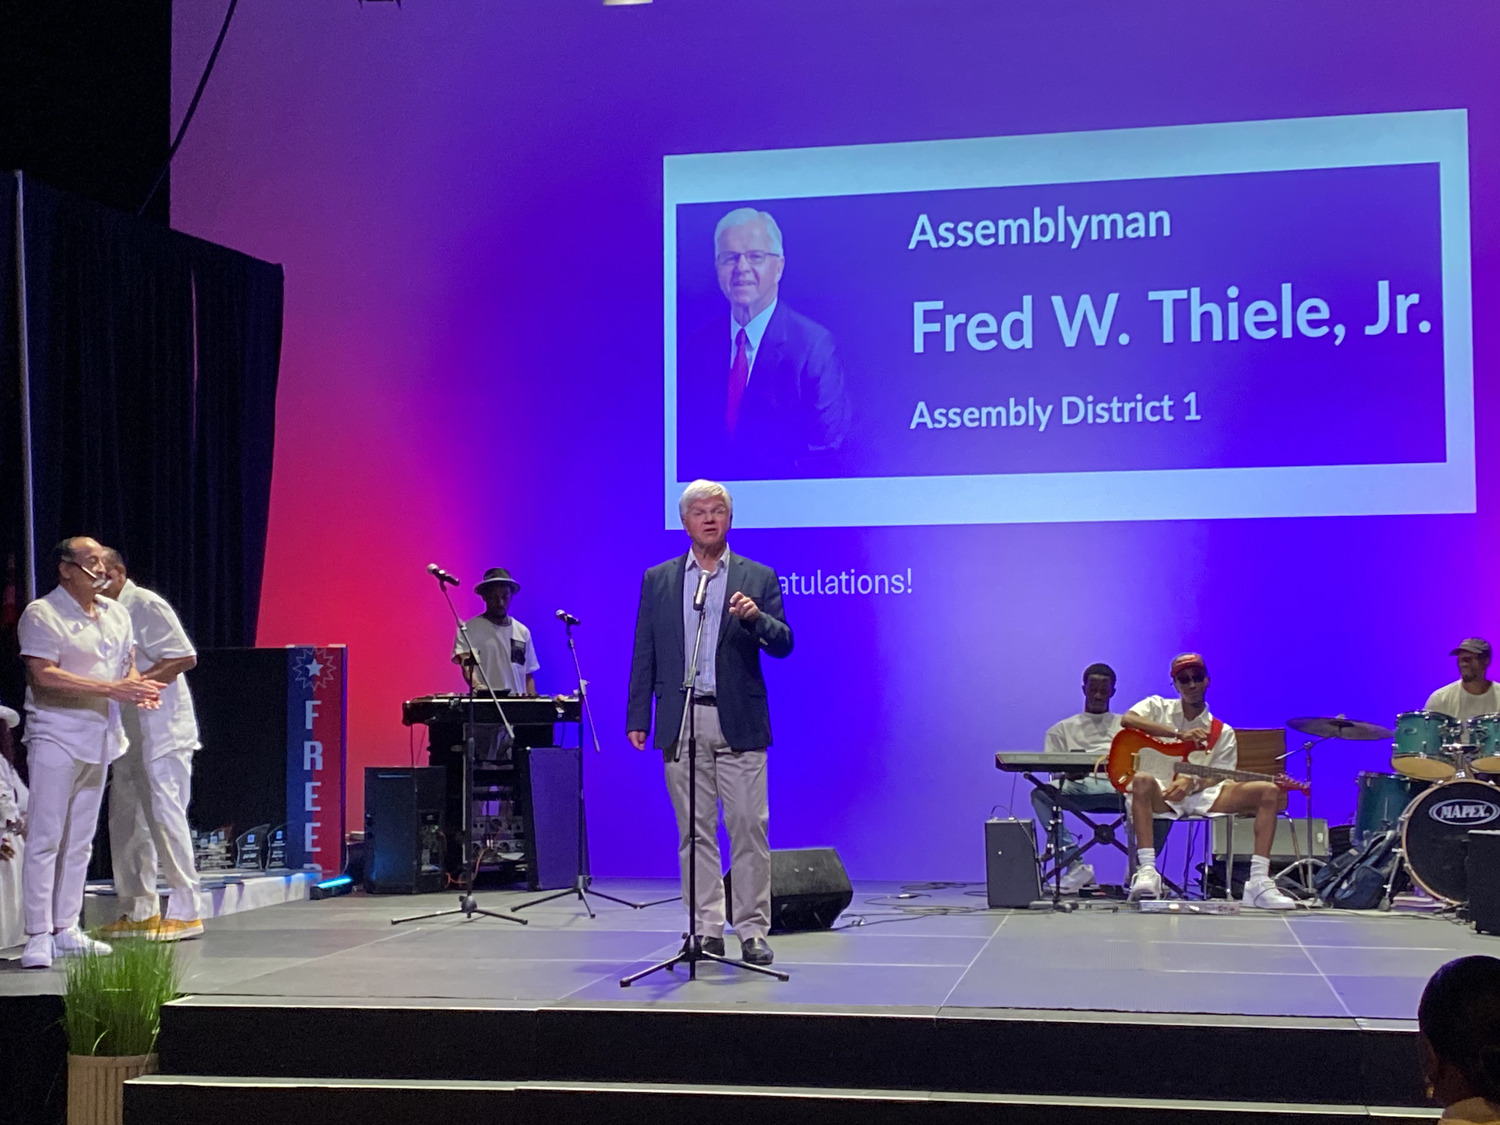 Assemblyman Fred W. Thiele Jr. spoke of progress and history at a Juneteenth celebration at LTV Studios. CHRISTOPHER WALSH